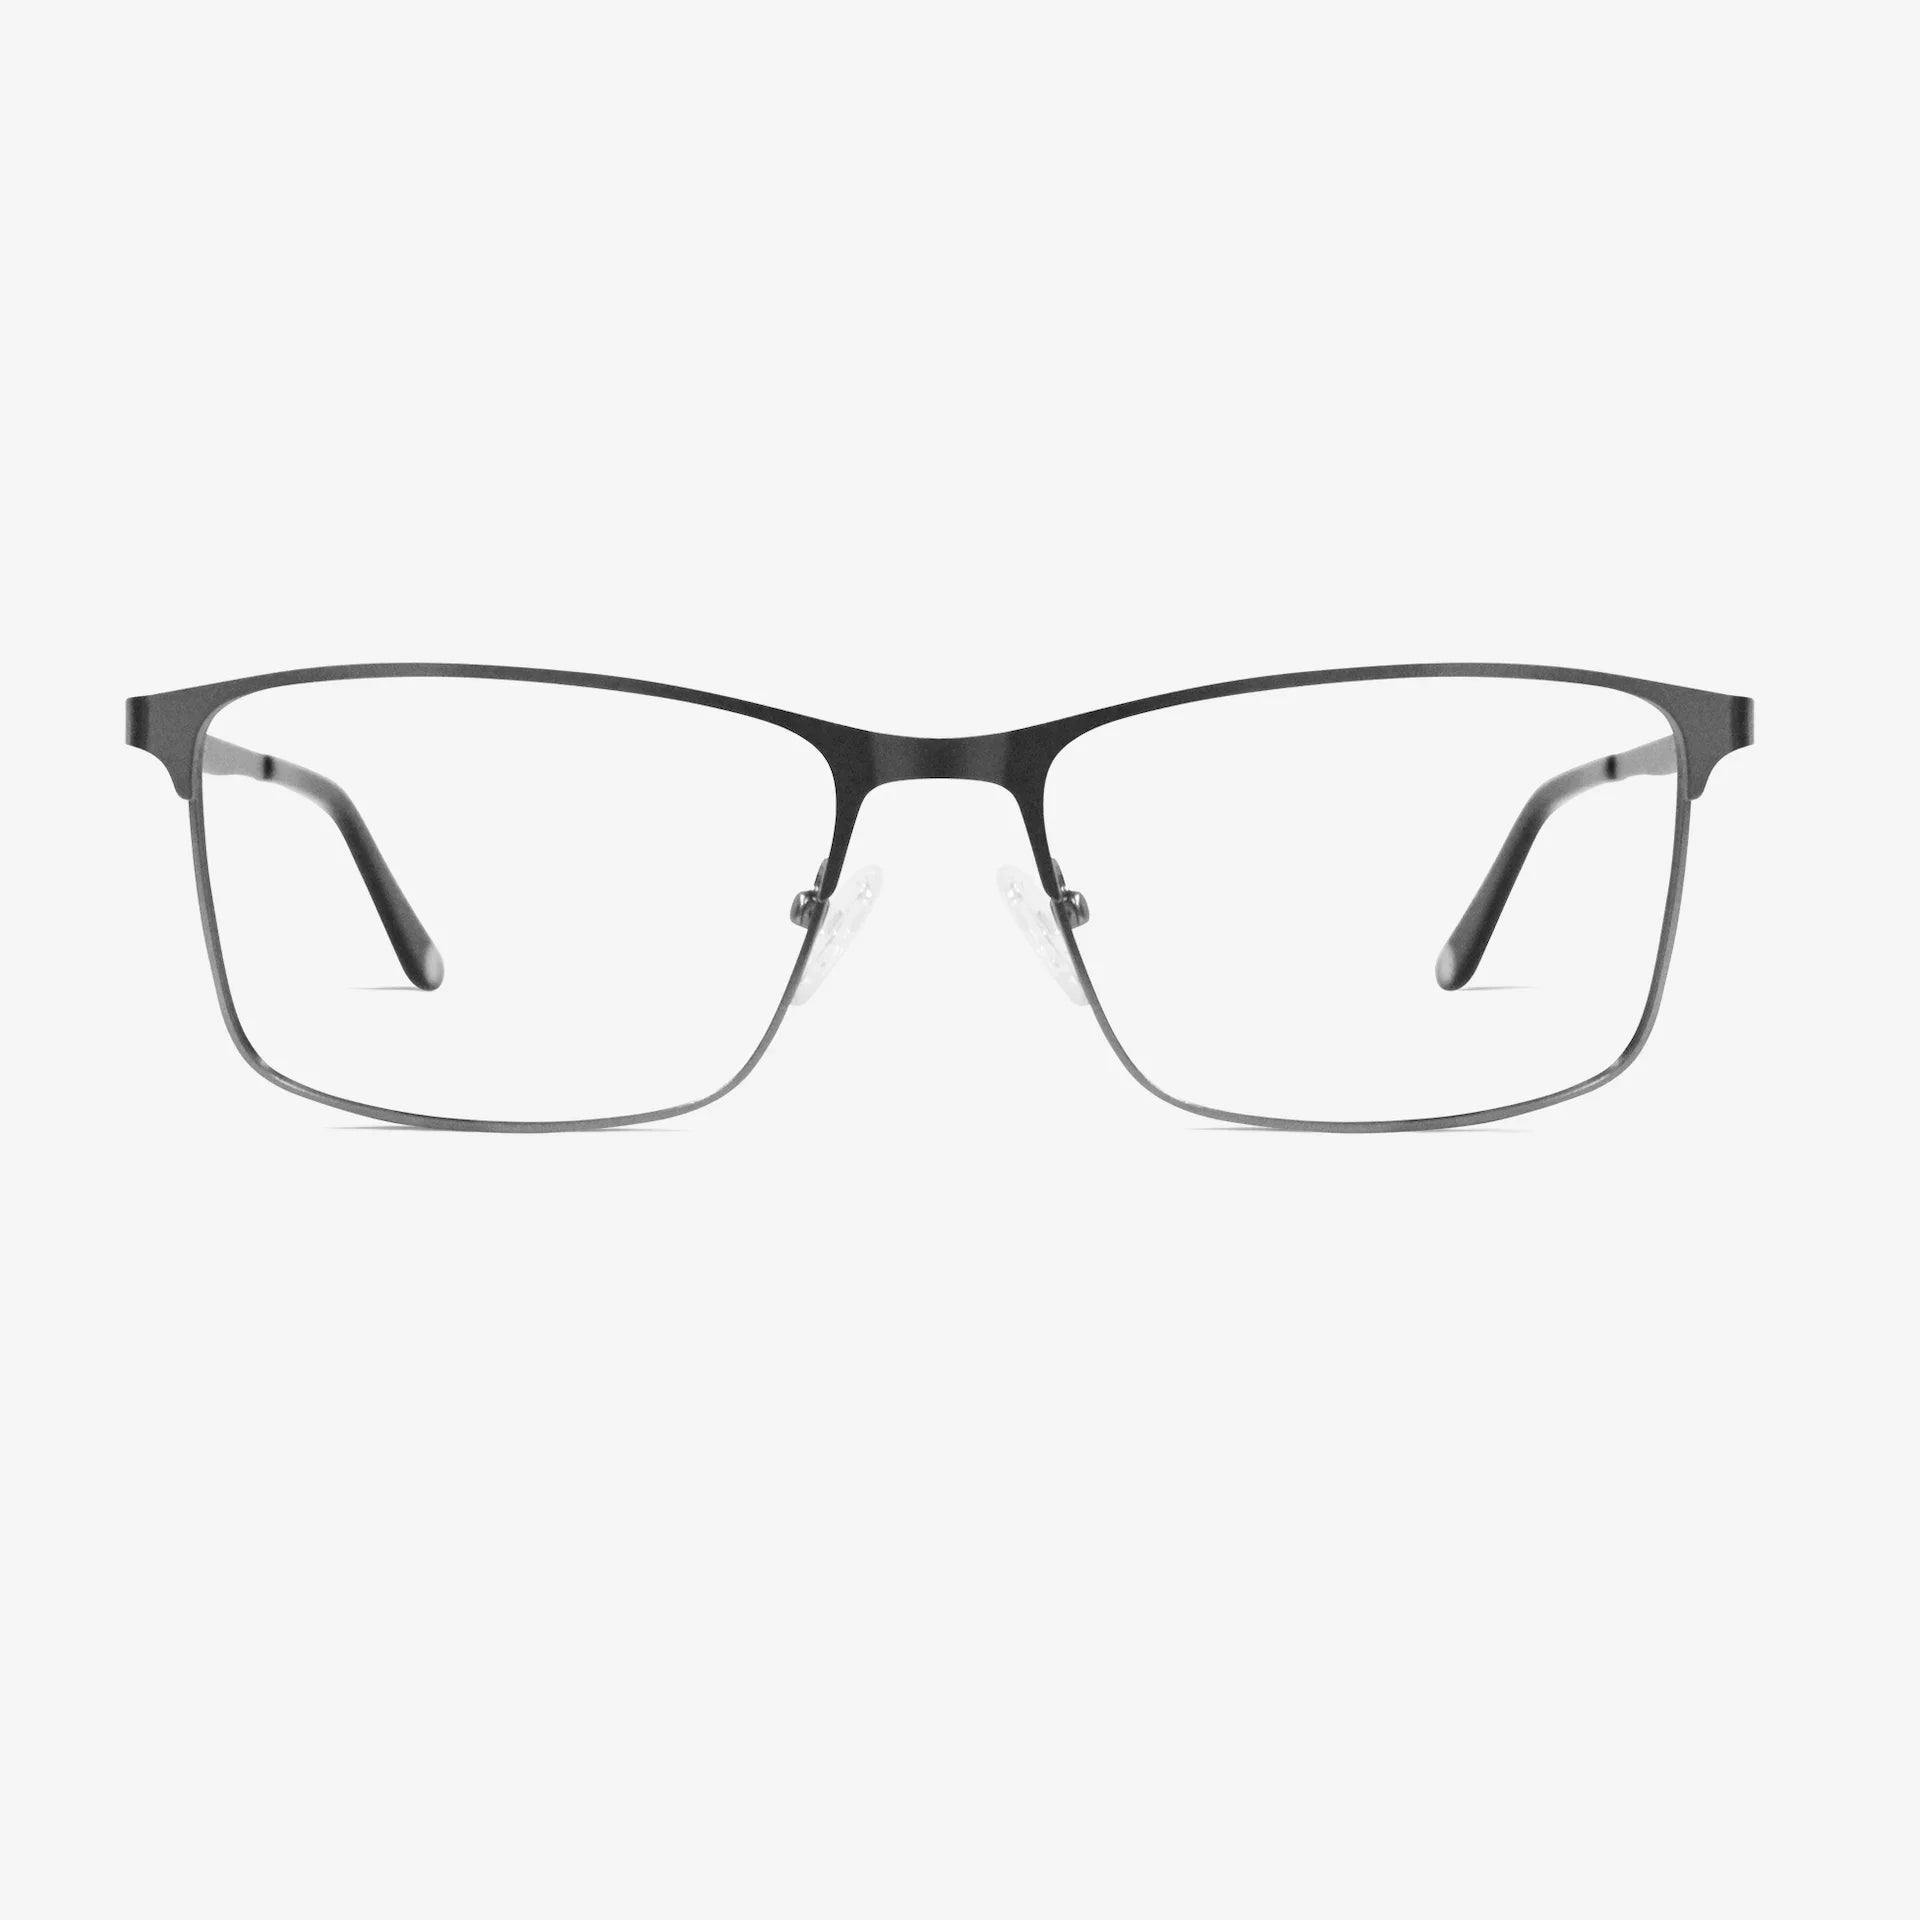 Huxley glasses | Superior Silver 